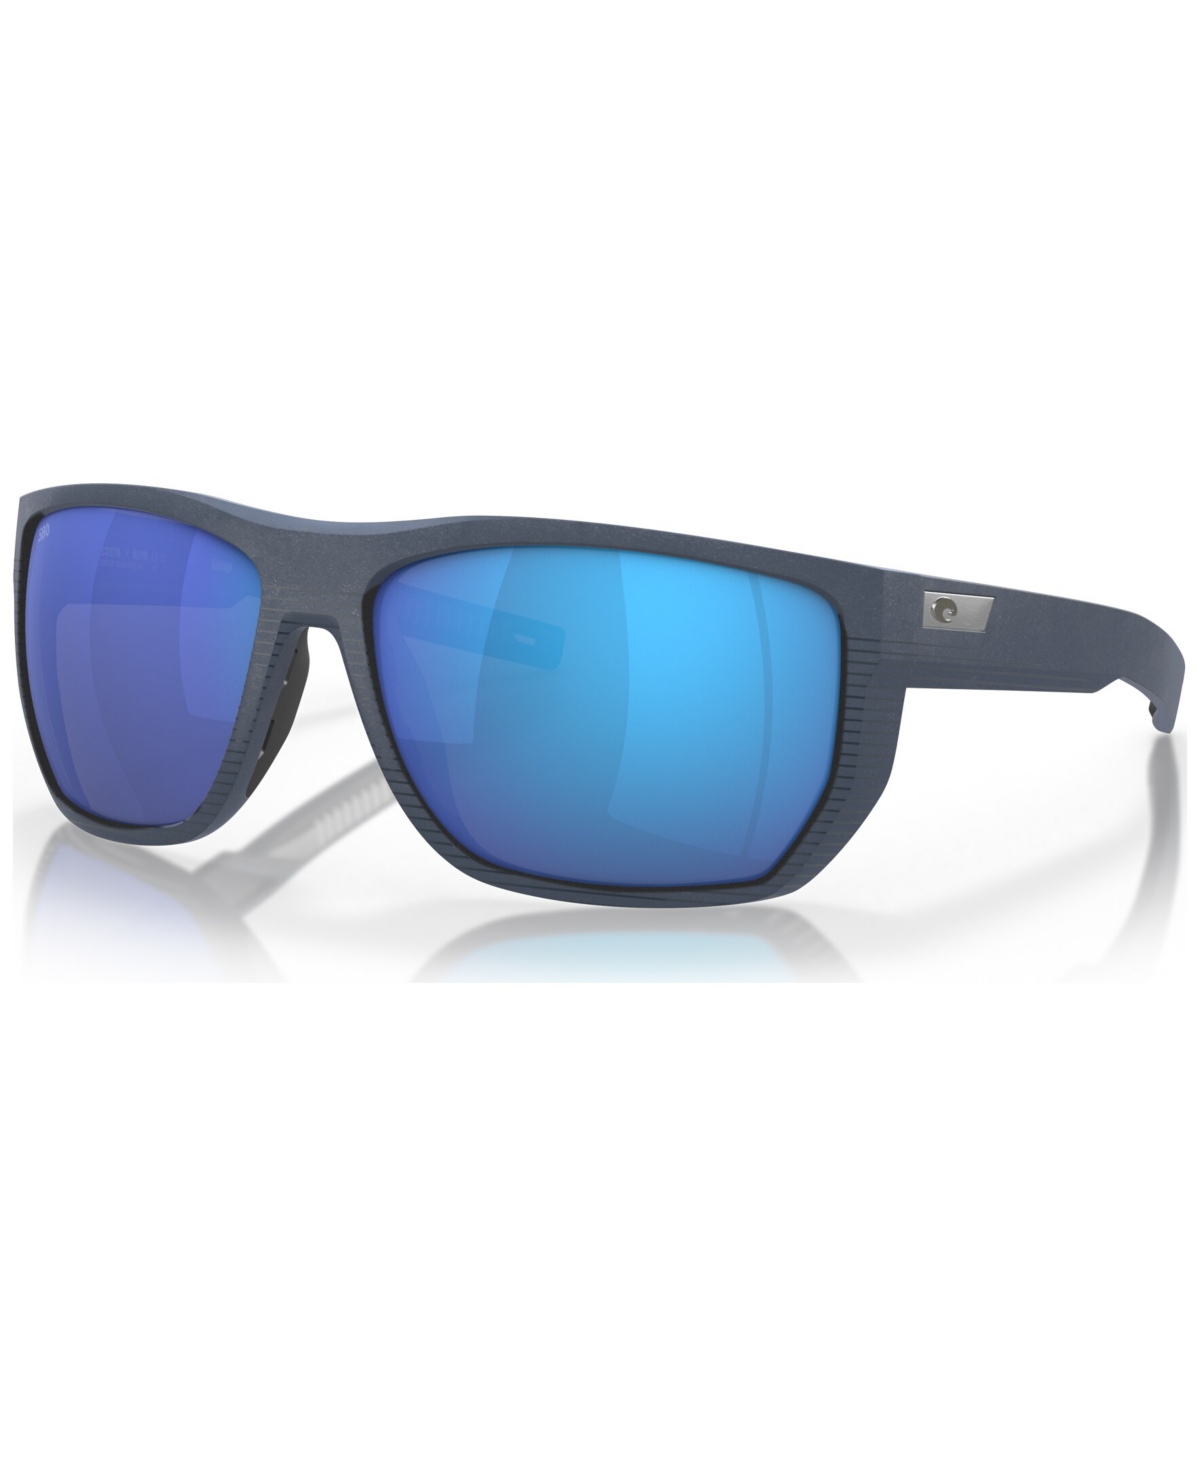 Men's Polarized Sunglasses, 6S908563-zp - Midnight Blue